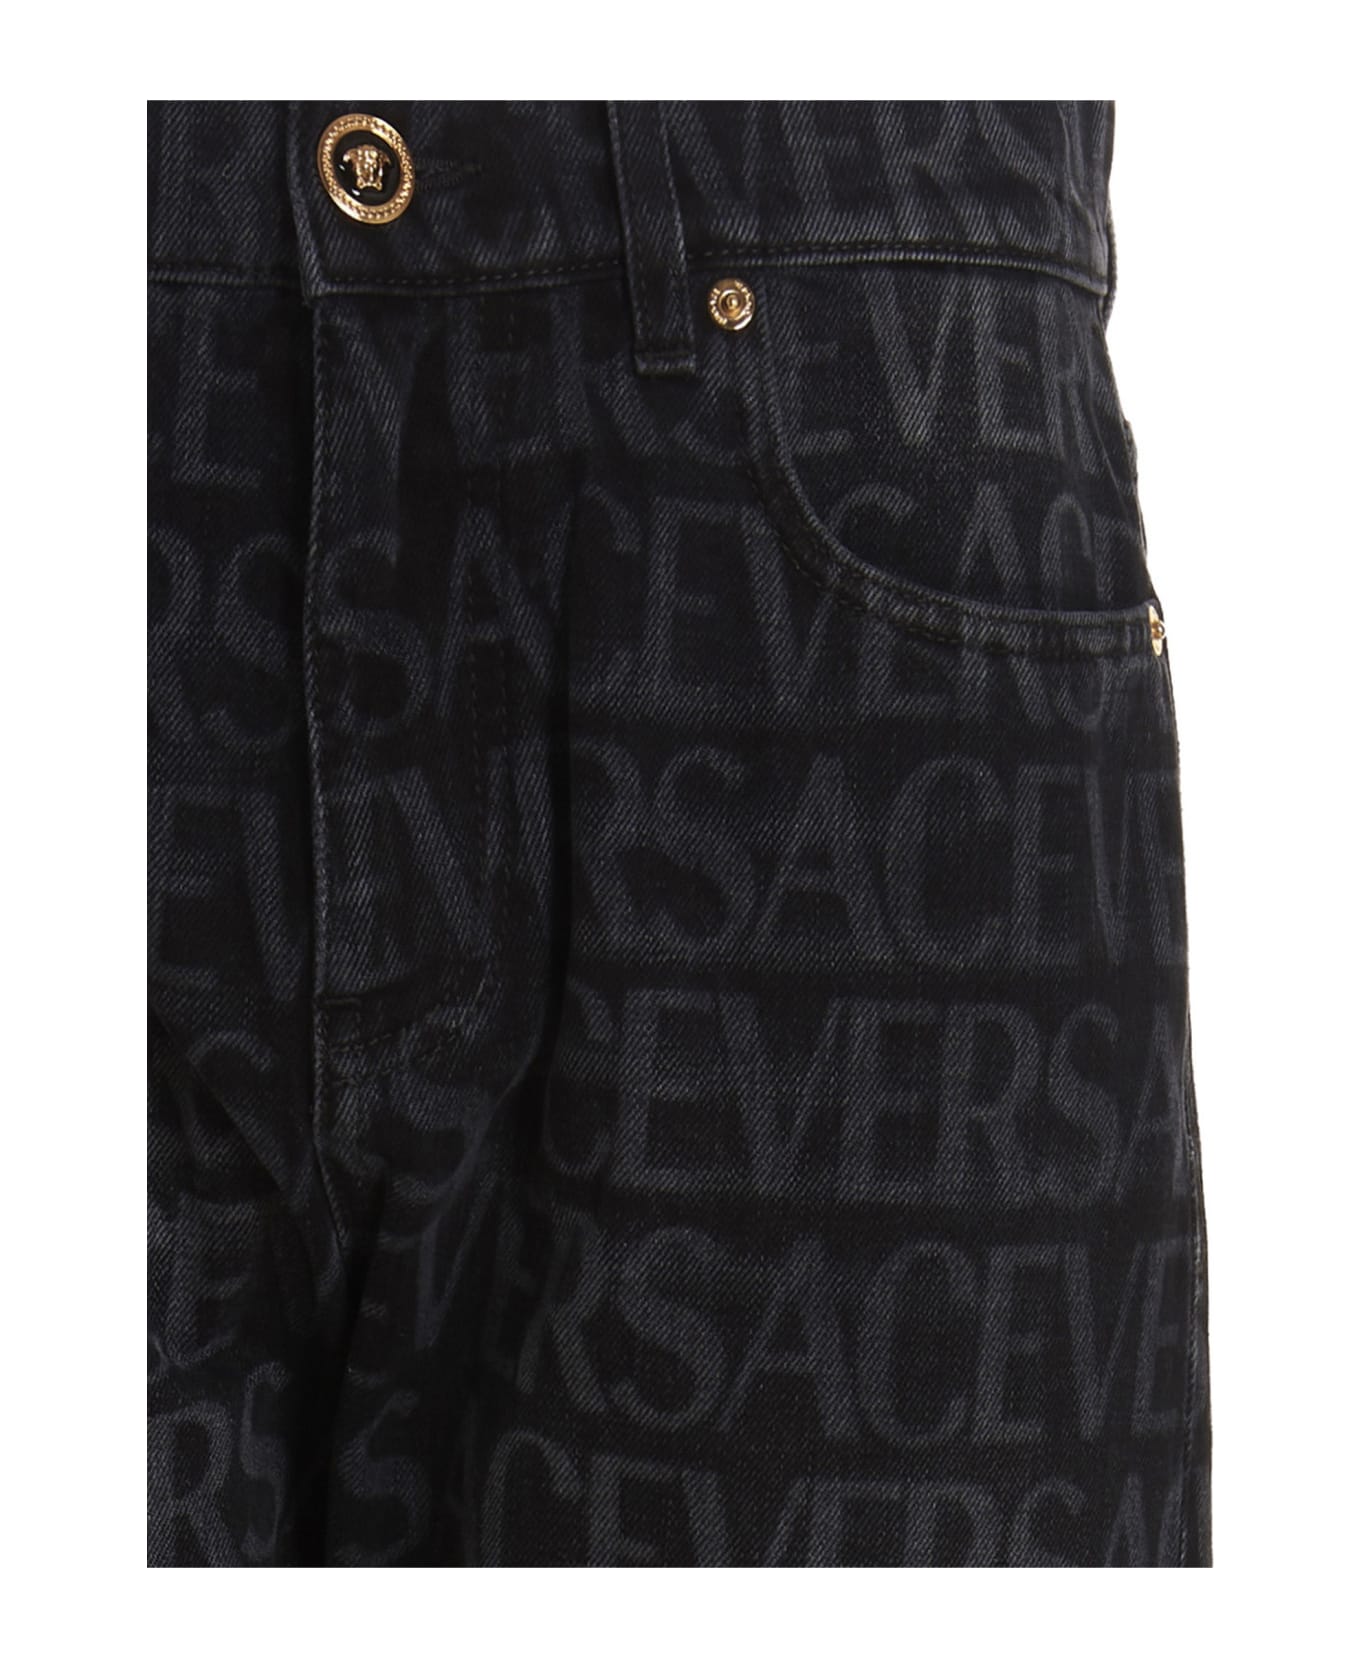 Versace Logo Print Jeans - Black